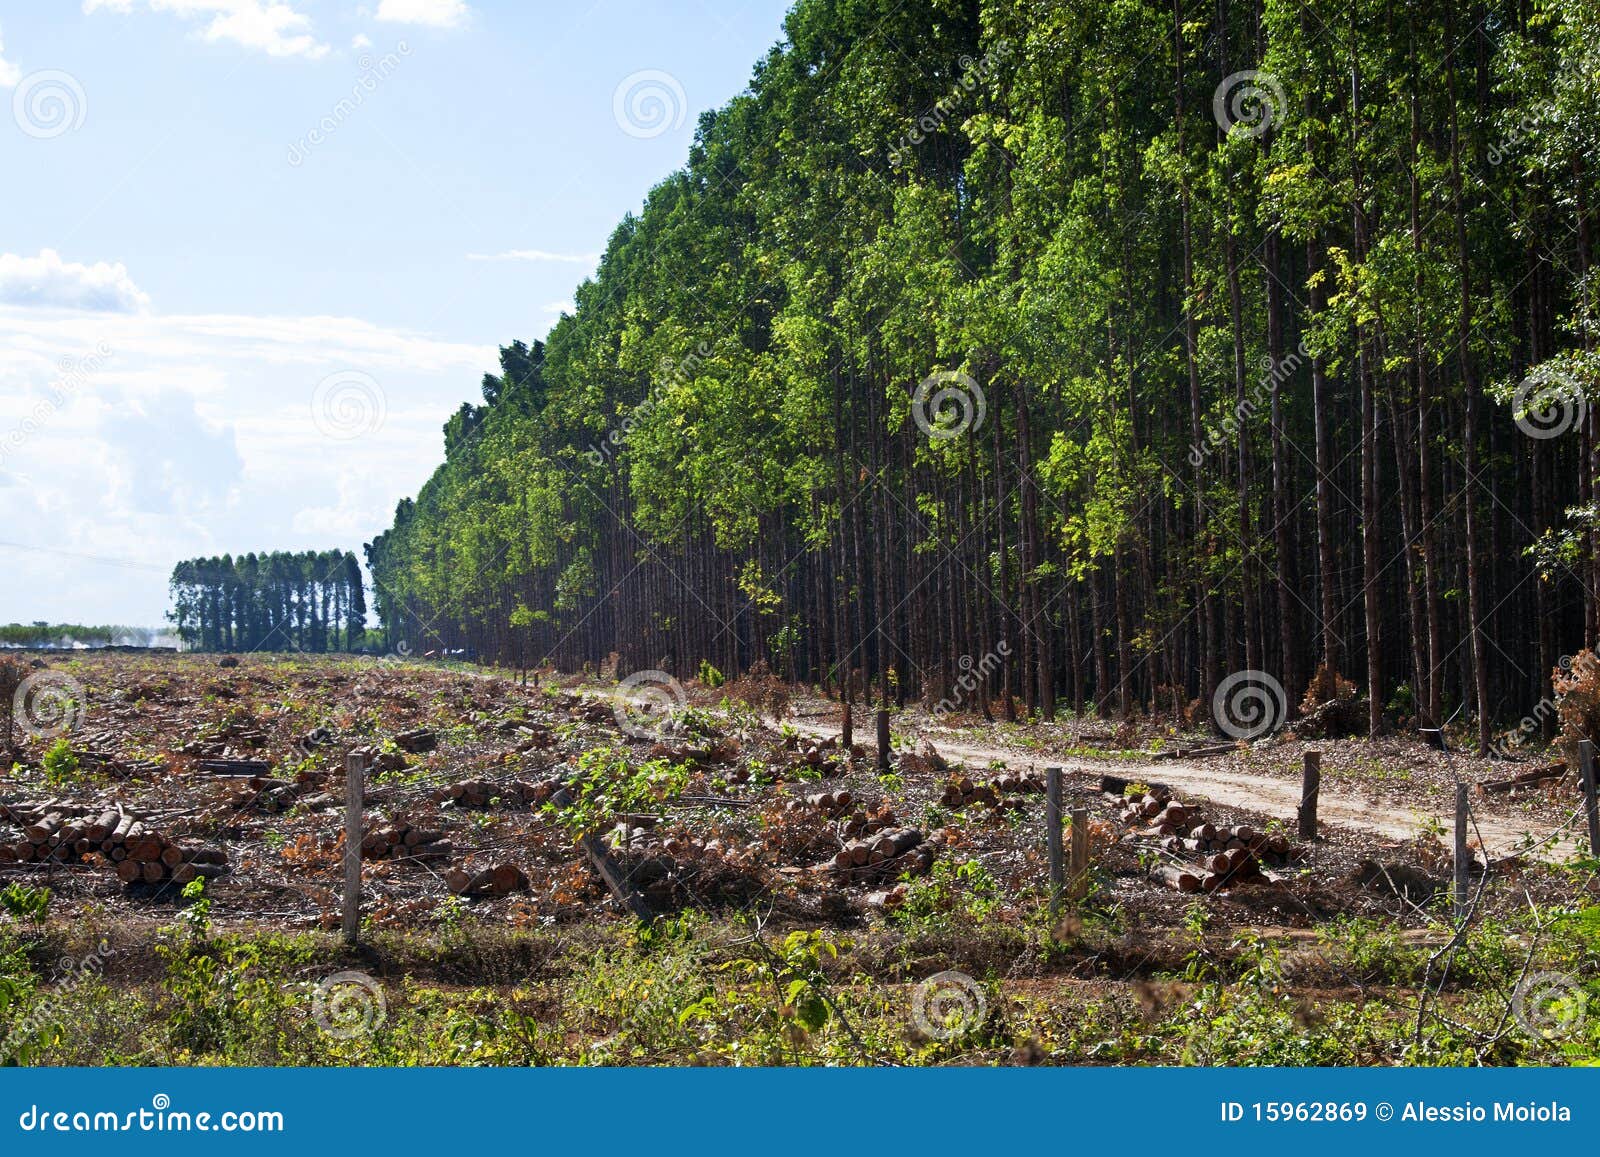 eucalyptus plantations